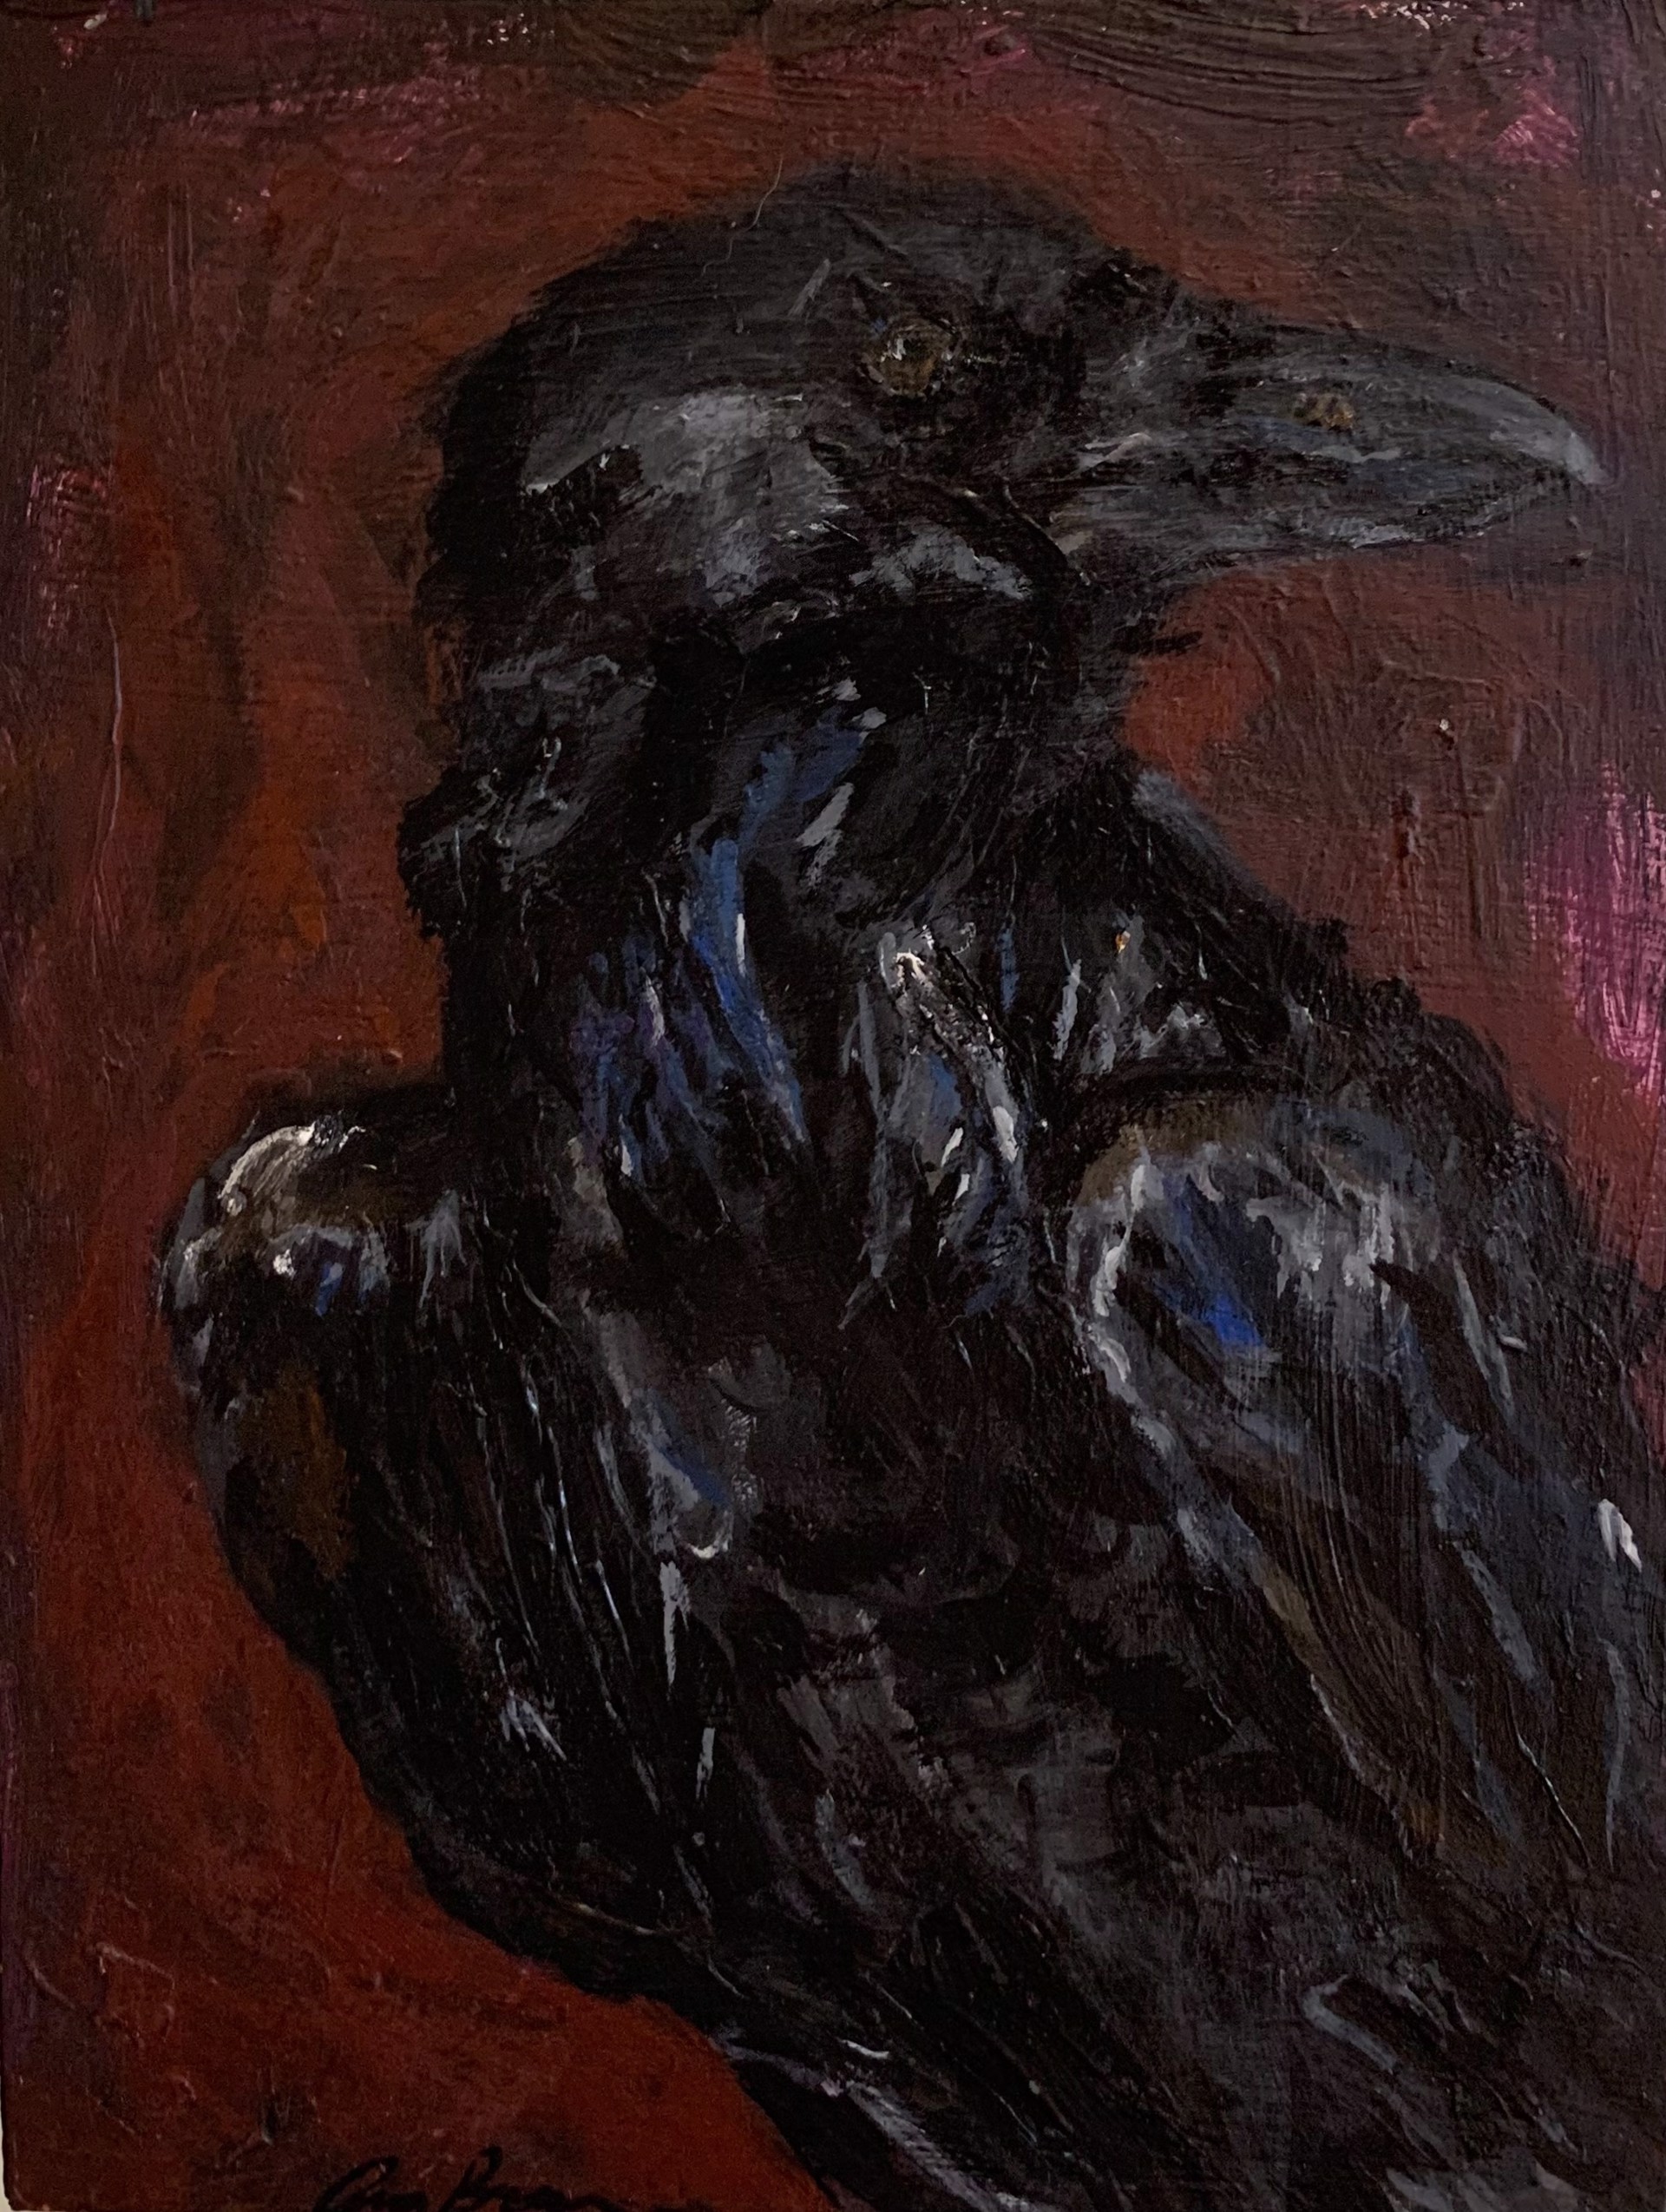 Merlot Crow by Ana Brown